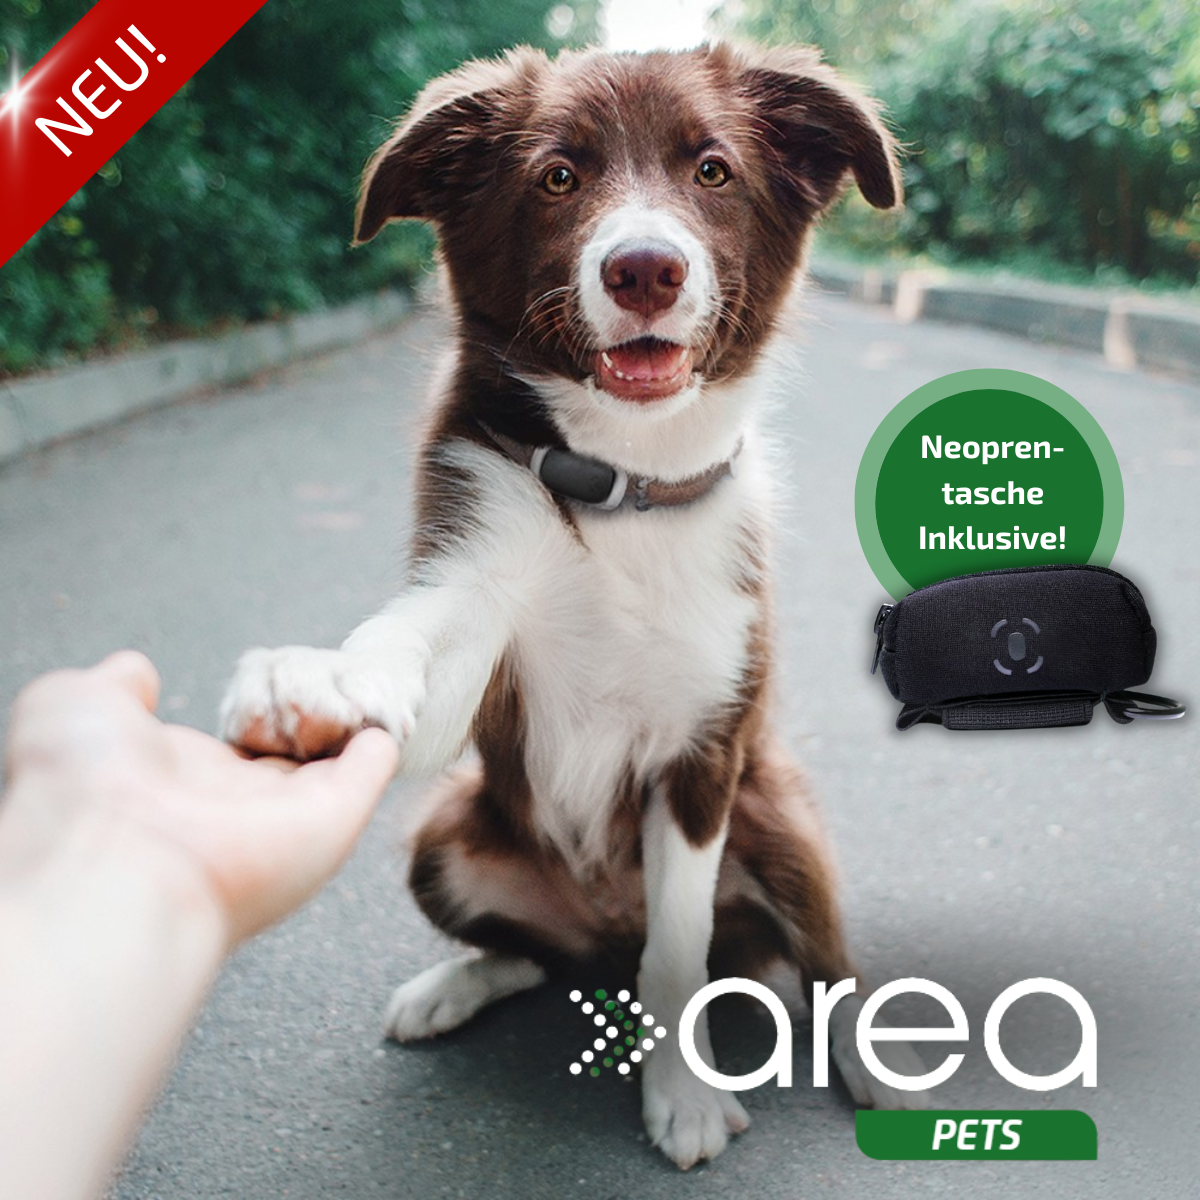 area Pets - GPS-Tracker für Tiere inkl. Neoprentasche / ***Aktion bis 31.01.23: 20% Rabatt (wird automatisch im Warenkorb abgezogen)***